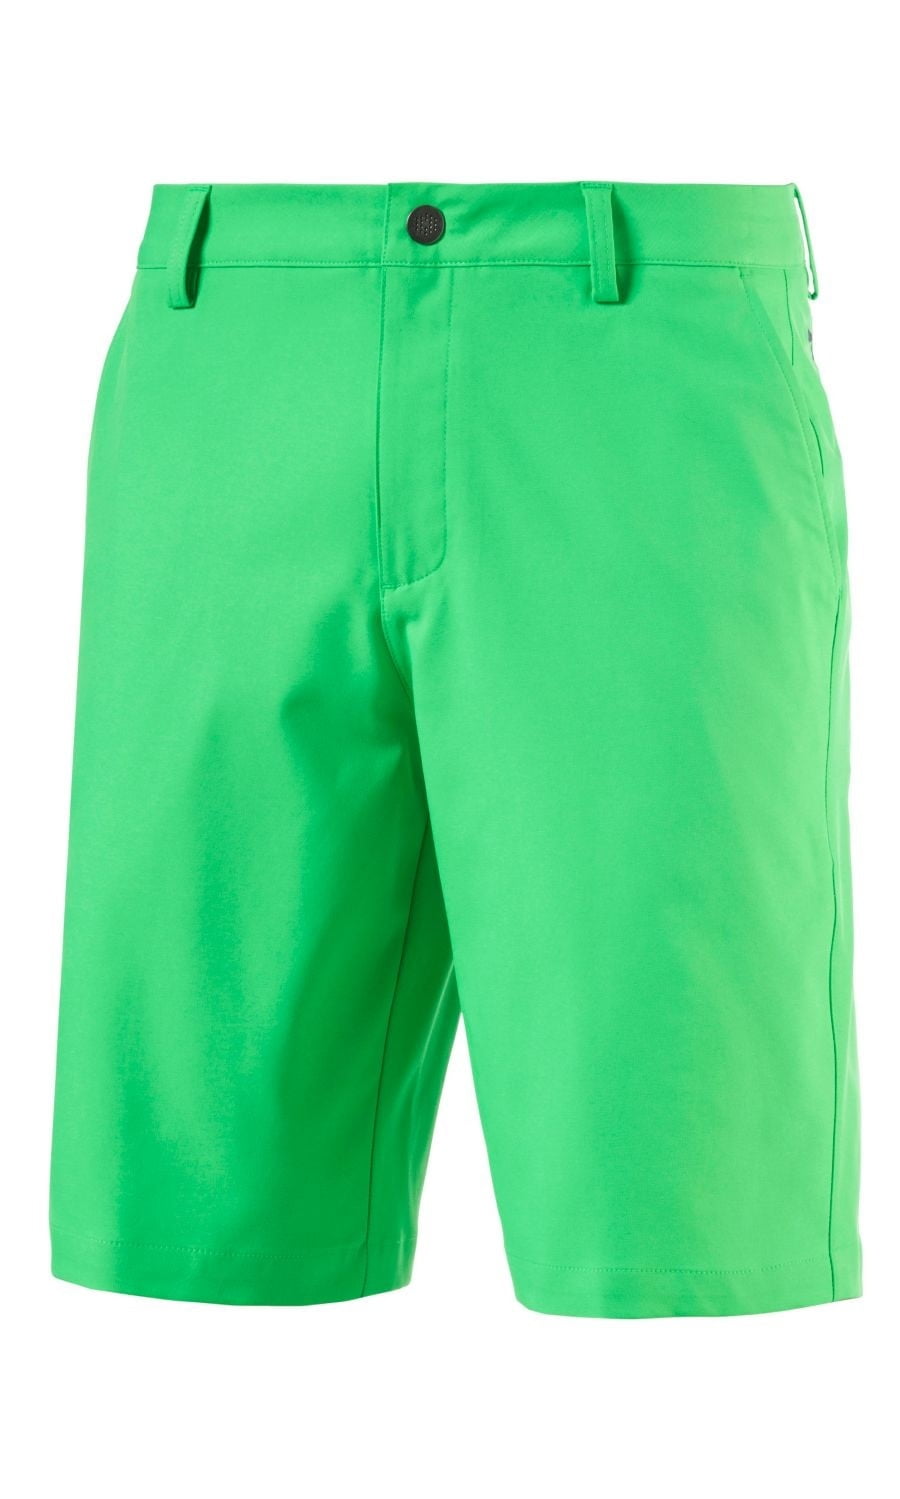 essential pounce short mens shorts - new 2018 - choose color & - Walmart.com